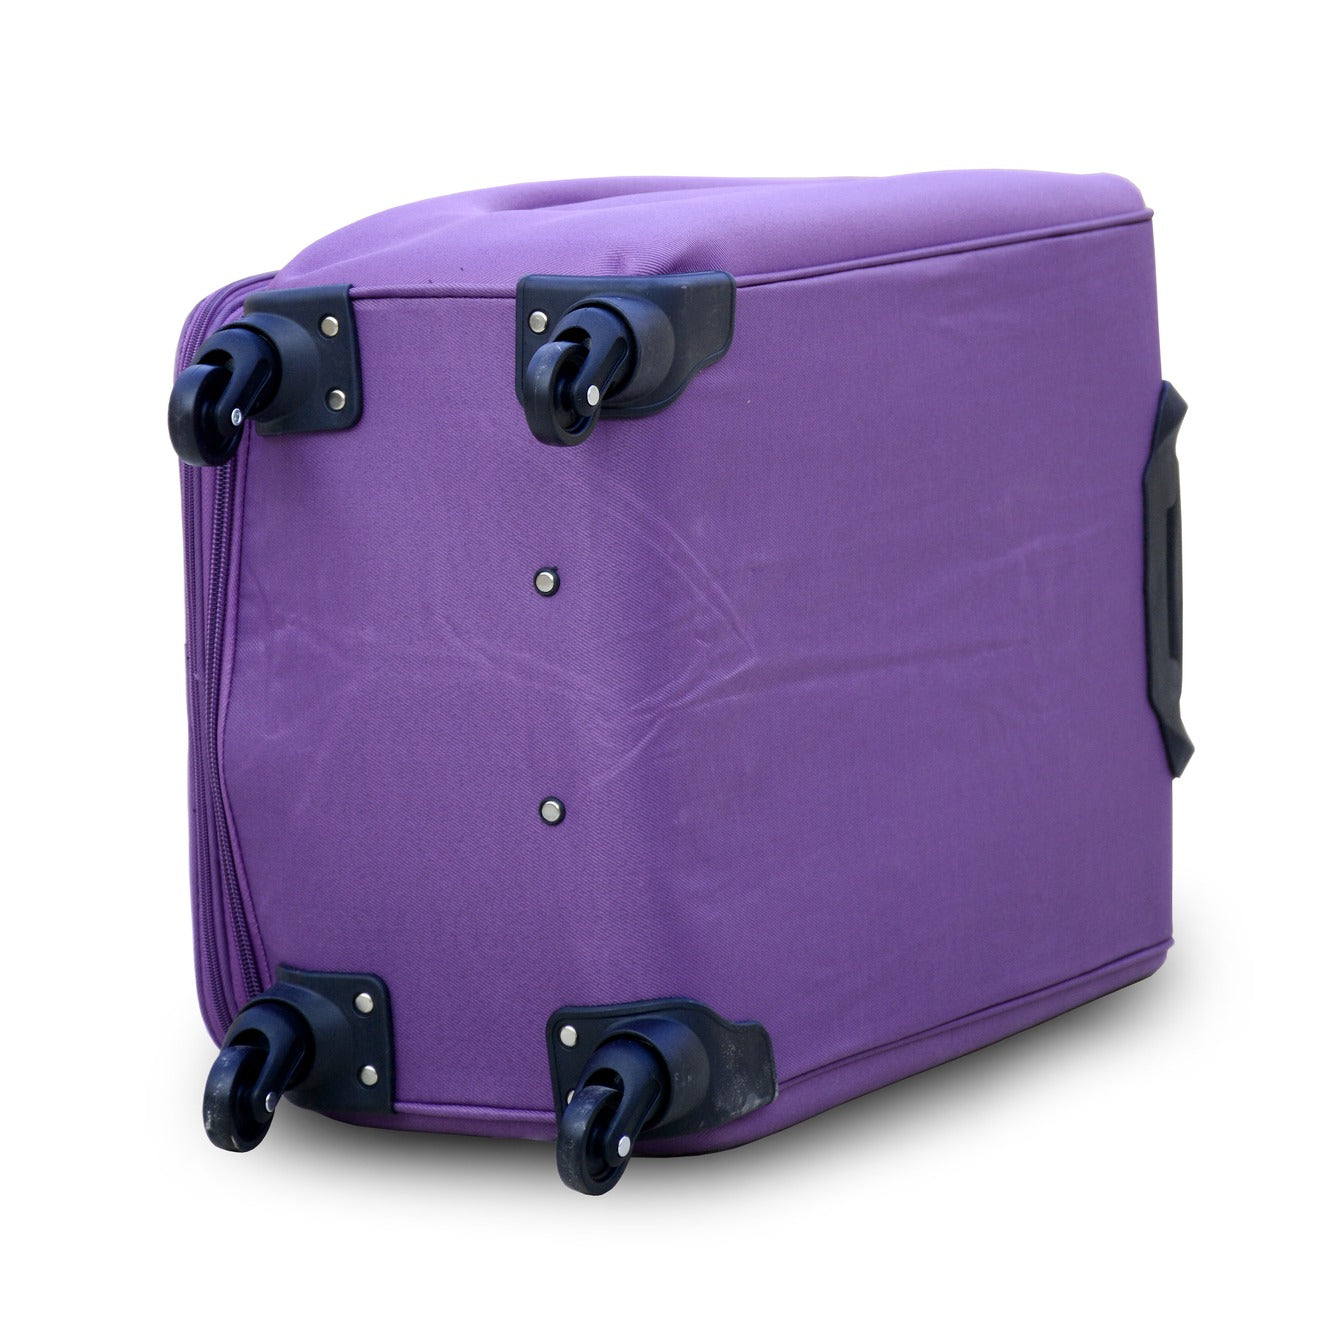 3 Piece Set 20" 24" 28 Inches Purple SJ JIAN 4 Wheel Luggage Lightweight Soft Material Trolley Bag